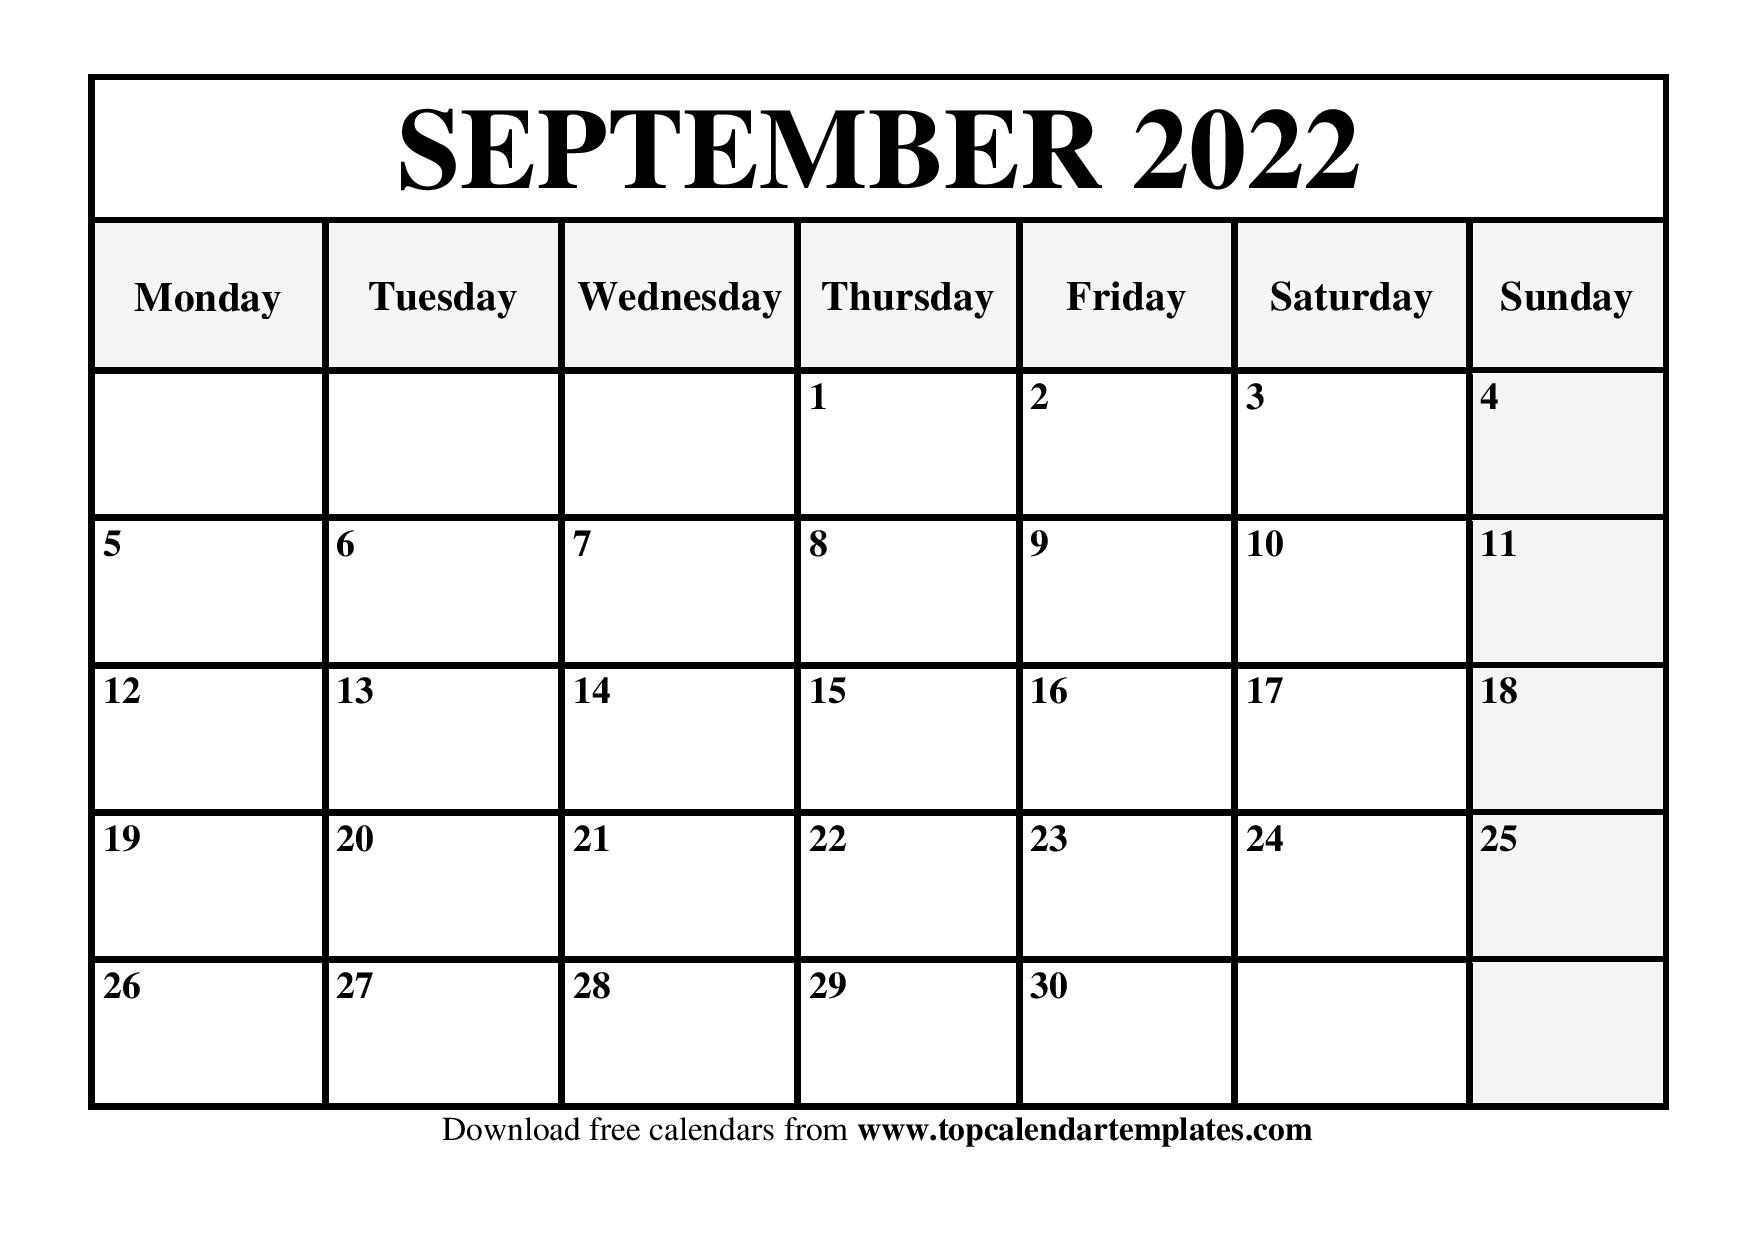 September Calendar For 2022 Printable Calendar September 2022 Templates - Pdf, Word, Excel